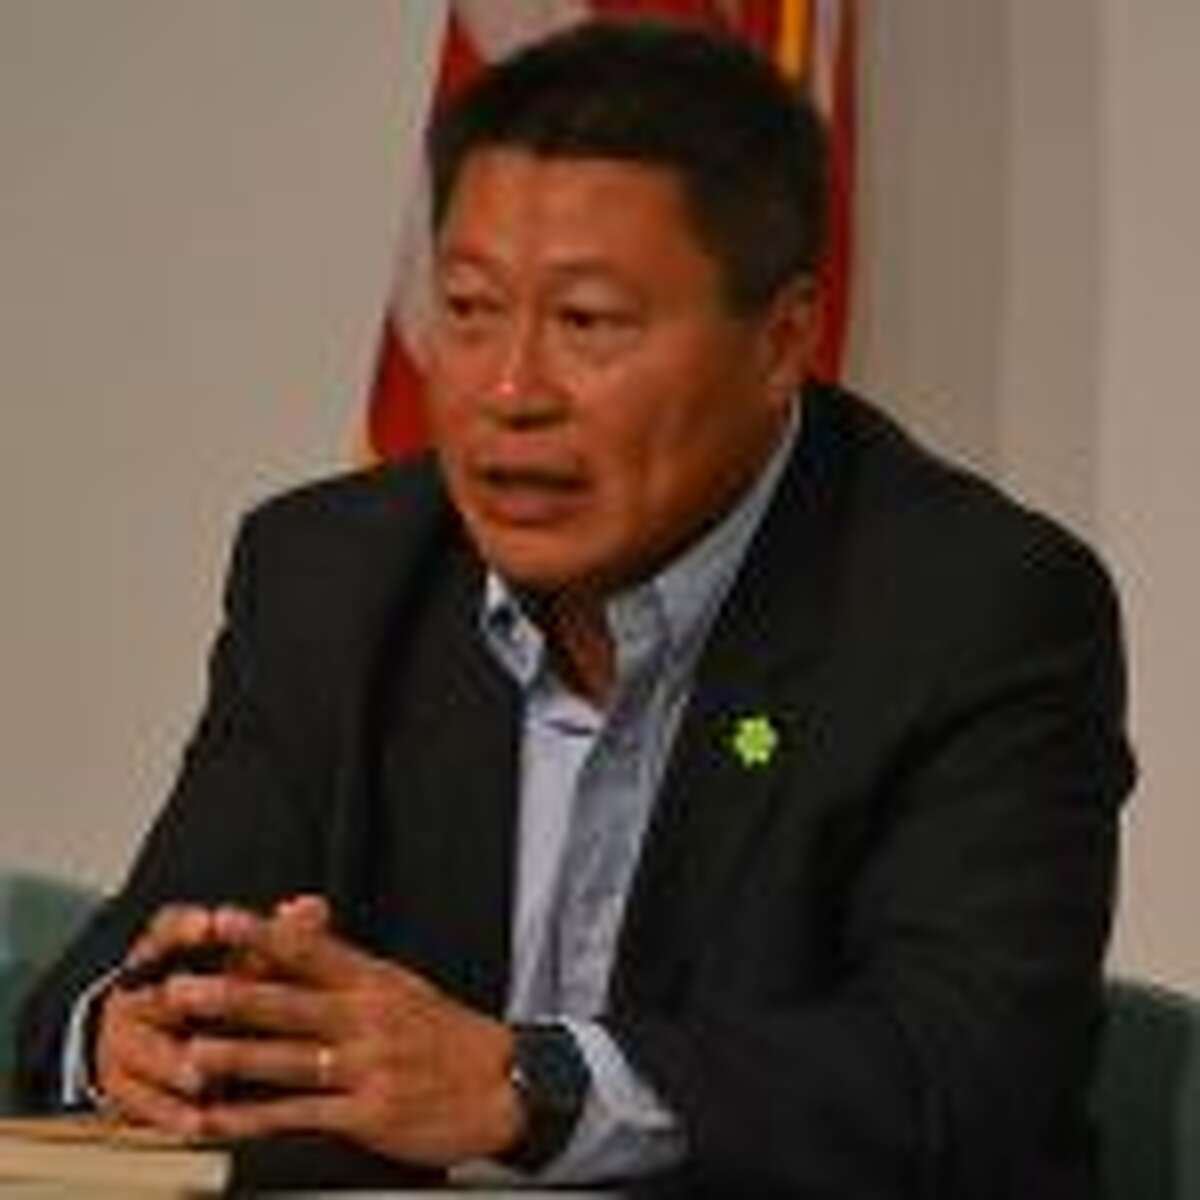 State Senator Tony Hwang